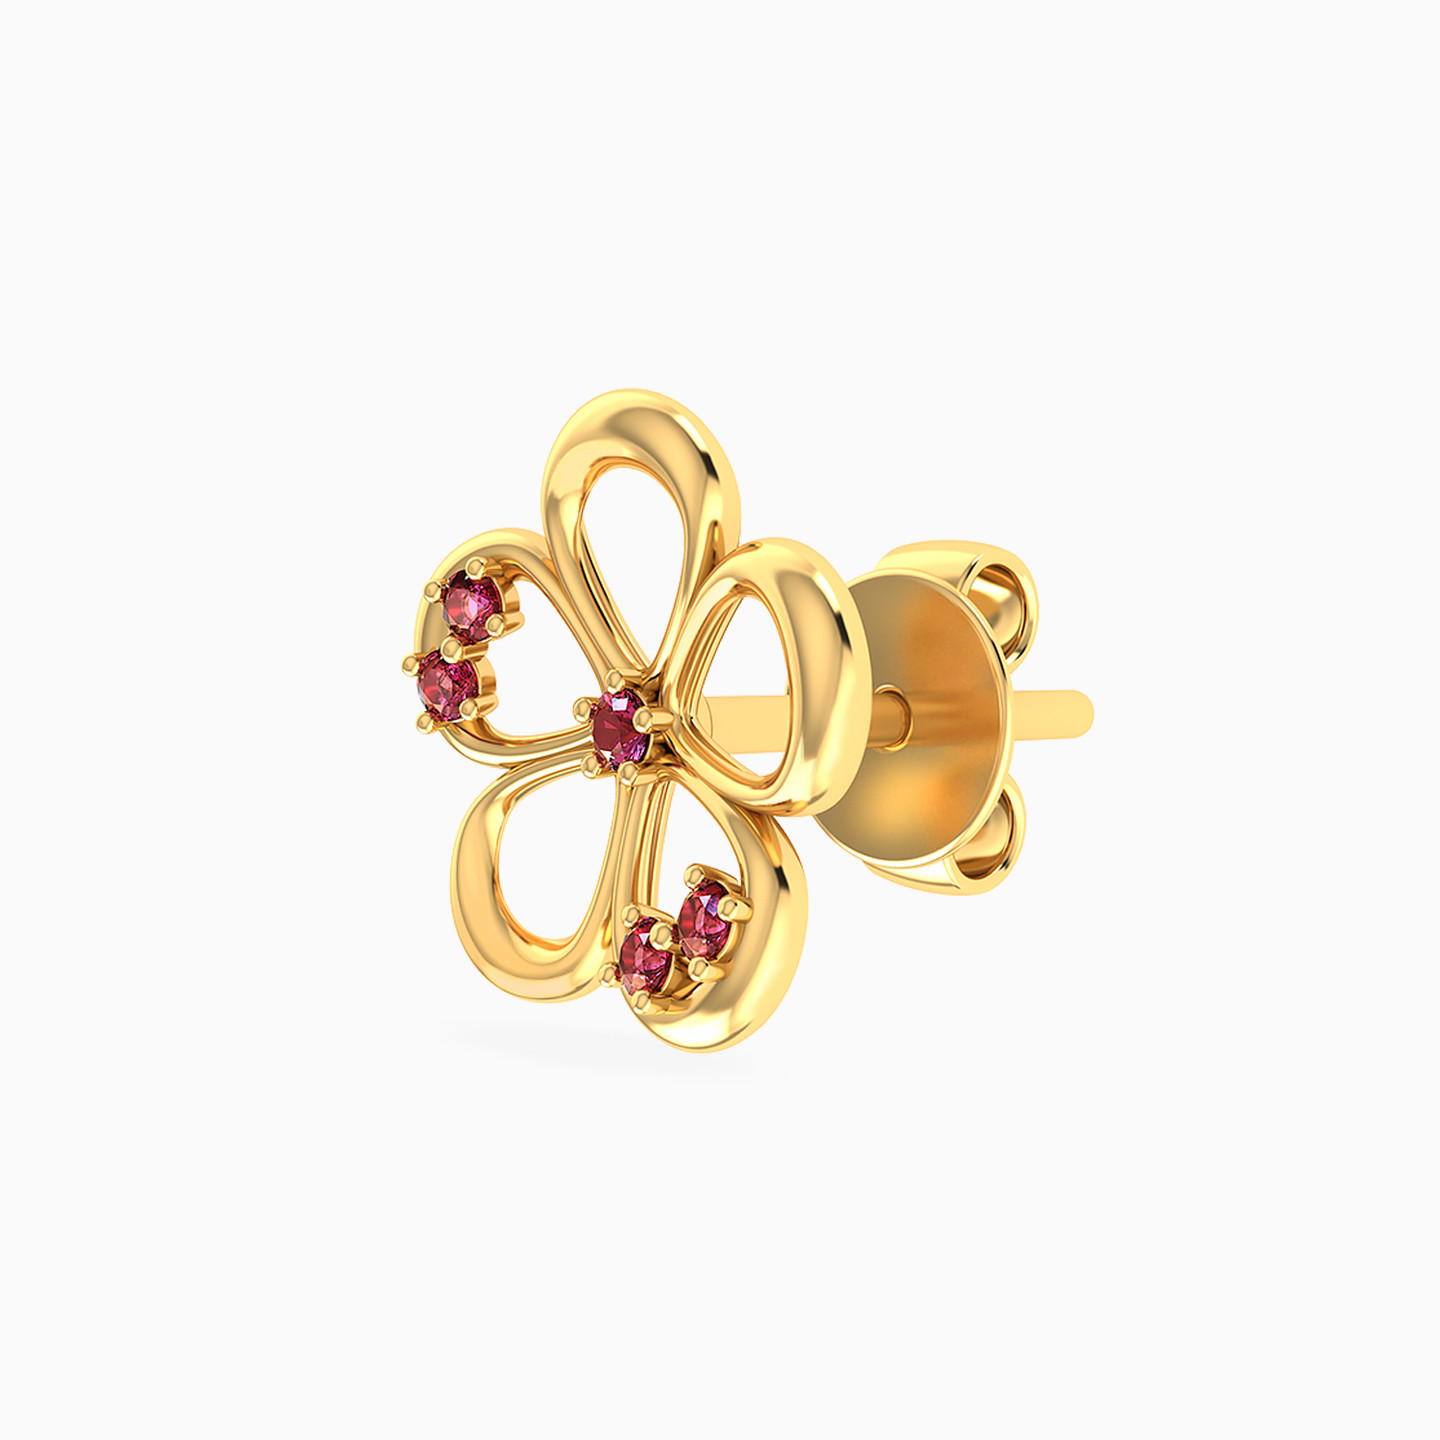 Flower Shaped Colored Stones Stud Earrings in 18K Gold - 3